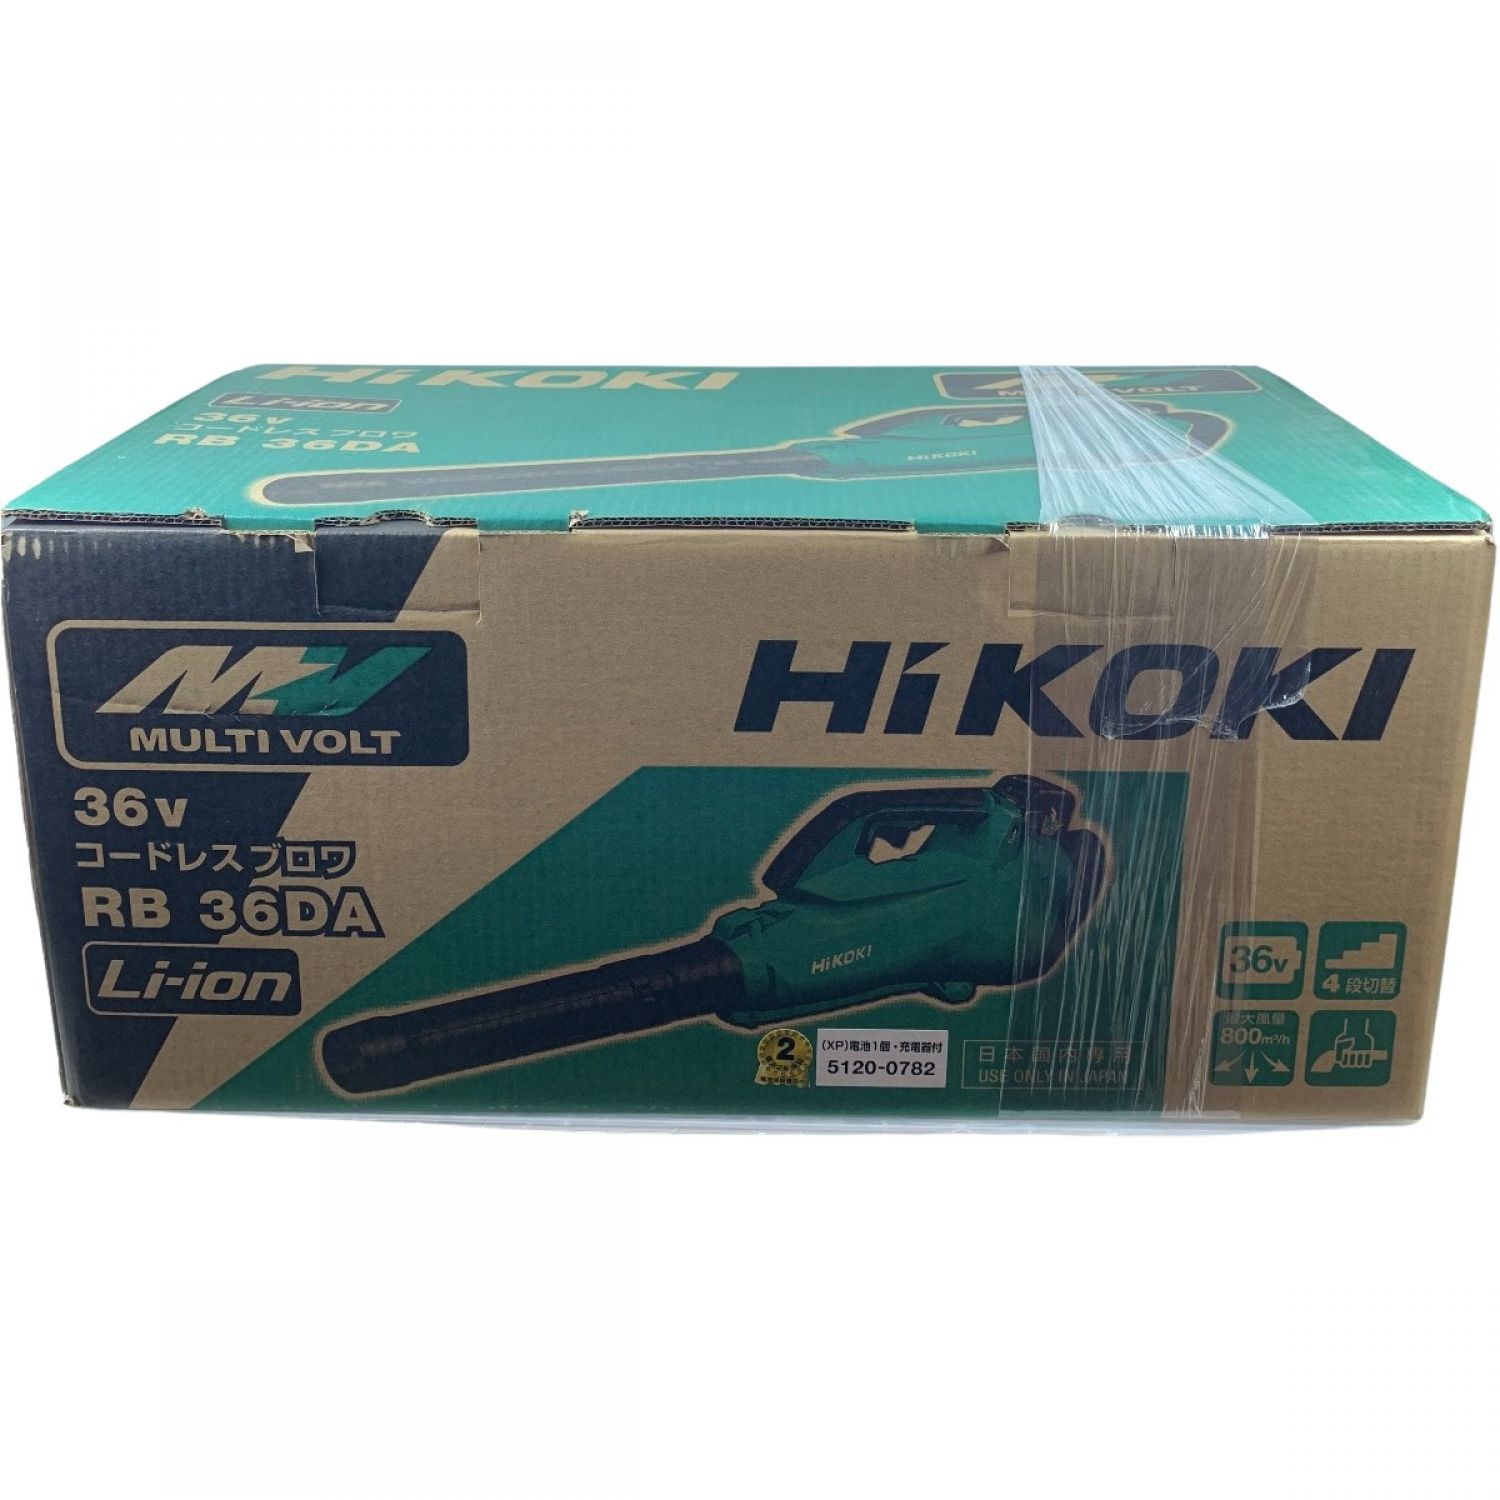 HiKOKI ハイコーキ ブロワ HiKOKI 未使用品 付属品完備 コードレス式 36v RB36DA(XP) Sランク